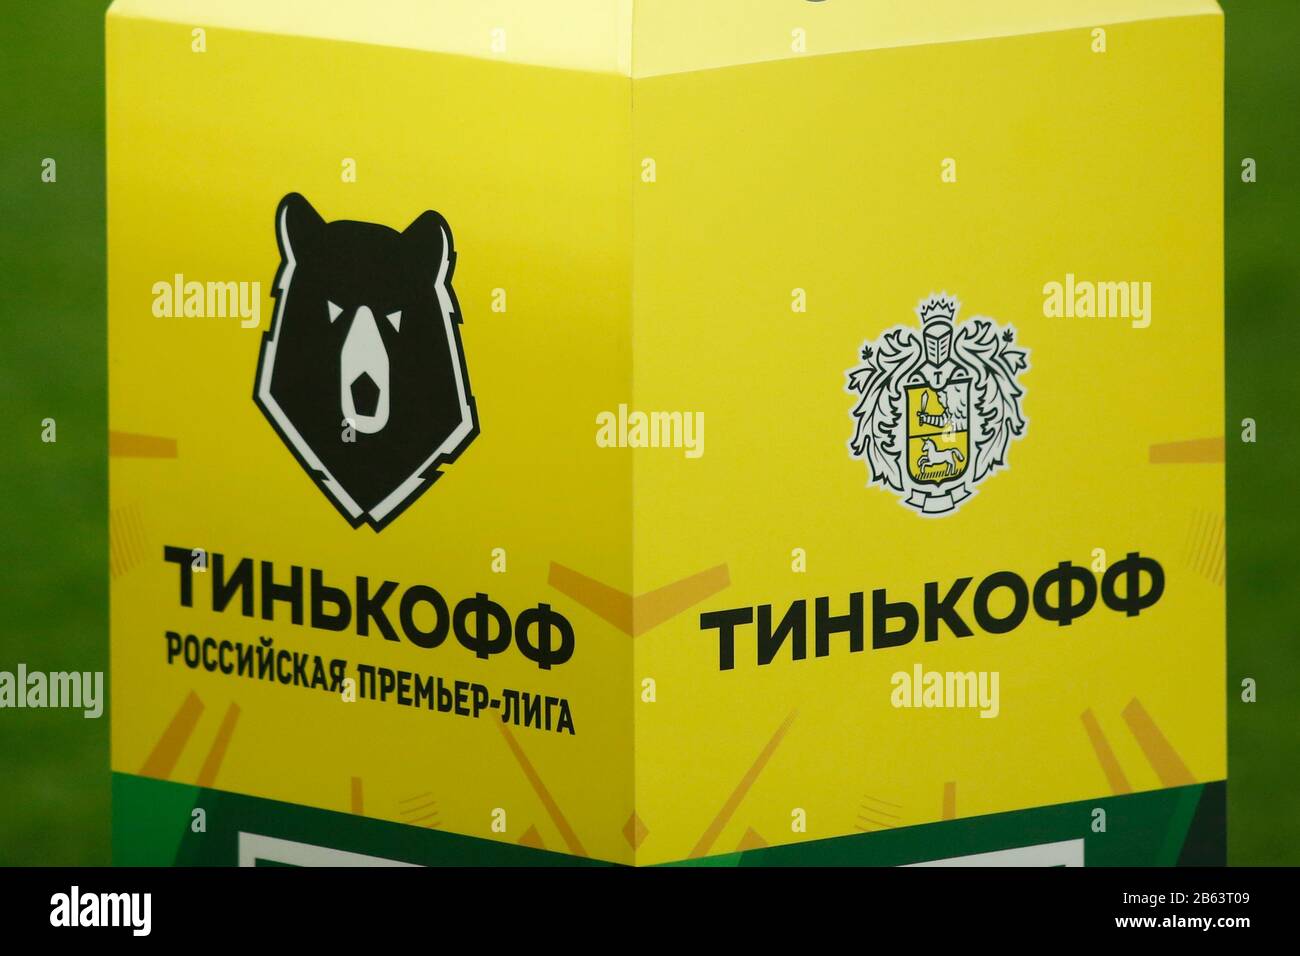 A view of a Russian Premier-League logo during the Russian football Premier League match between Zenit St. Petersburg and FC Ufa. (Final score; Zenit St. Petersburg 0:0 FC Ufa) Stock Photo